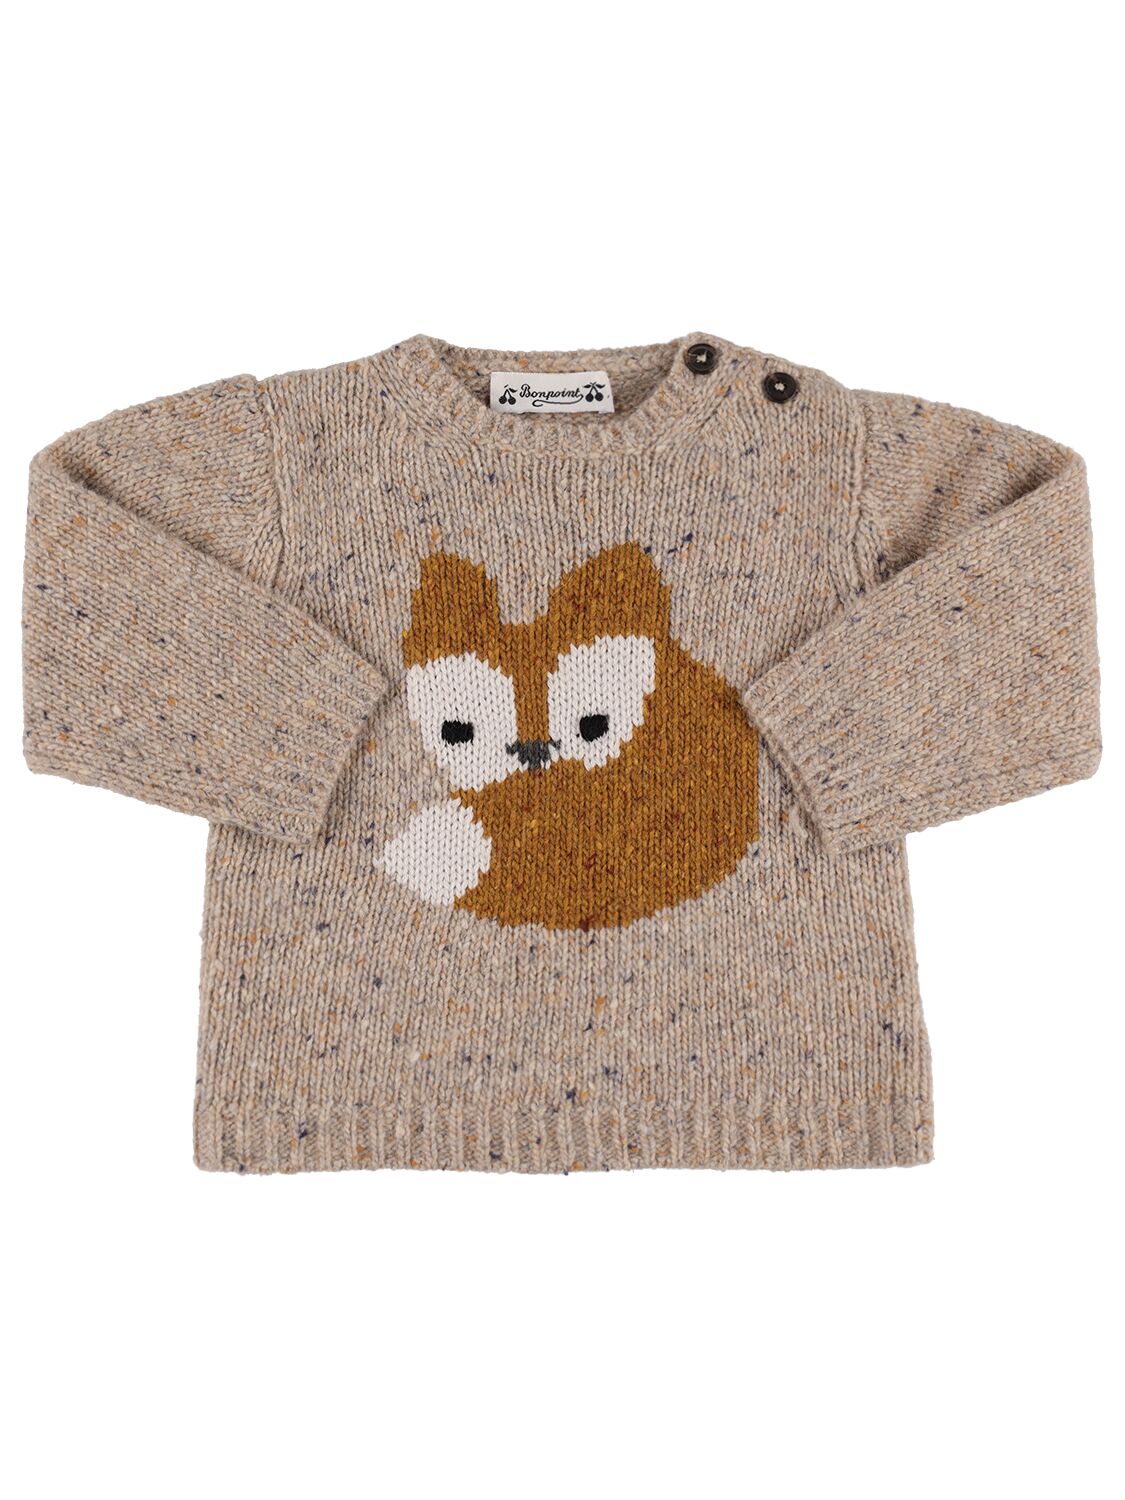 Image of Blumaro Wool Blend Sweater